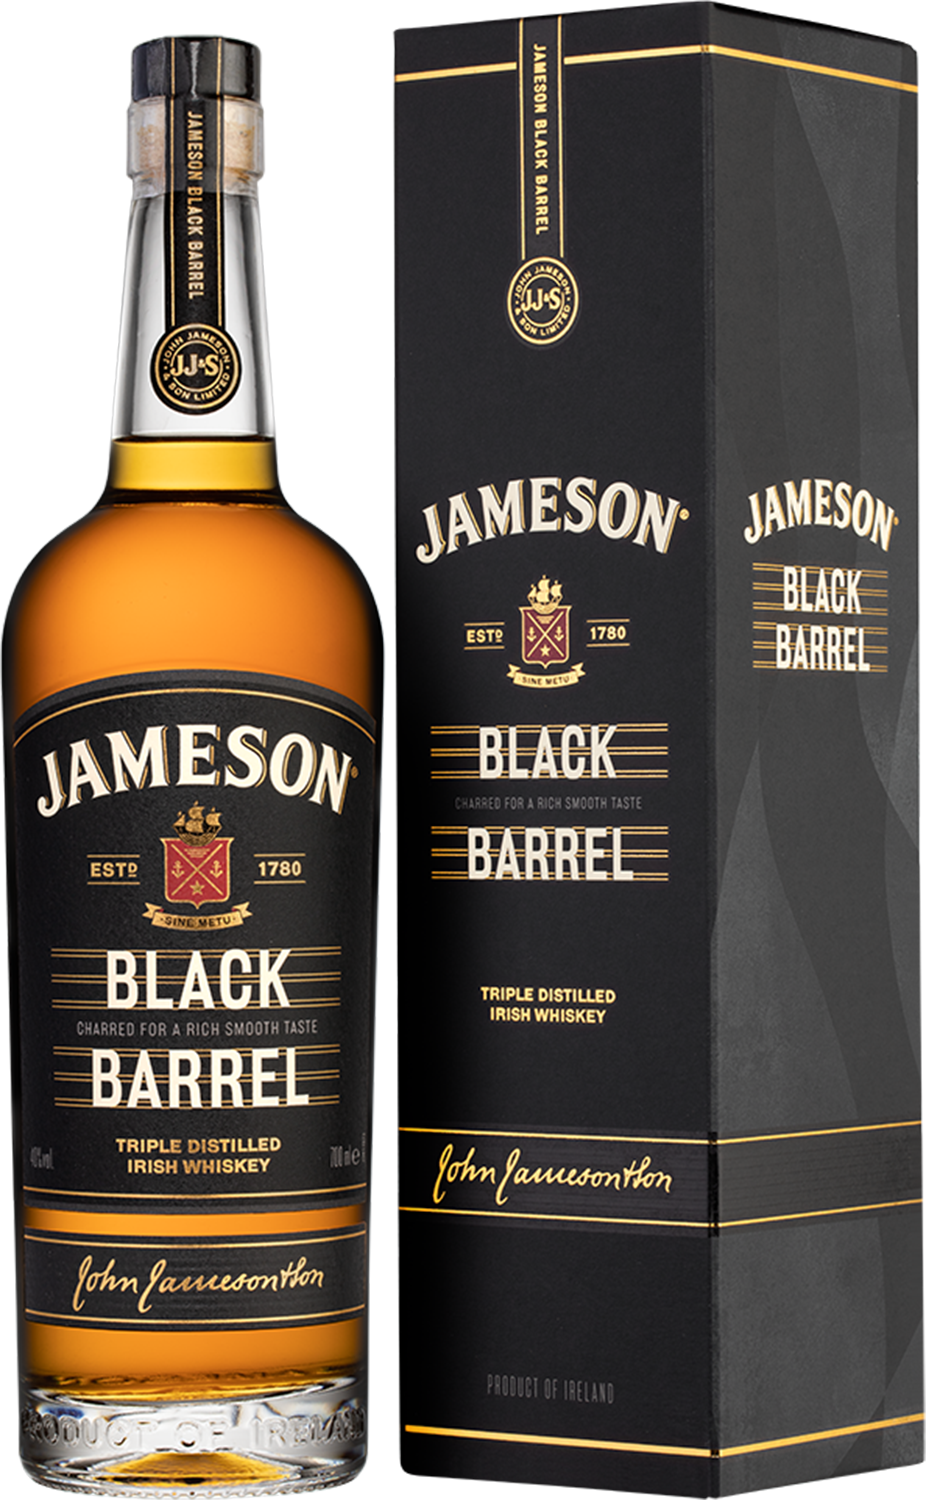 Jameson Black Barrel Blended Irish Whiskey (gift box)